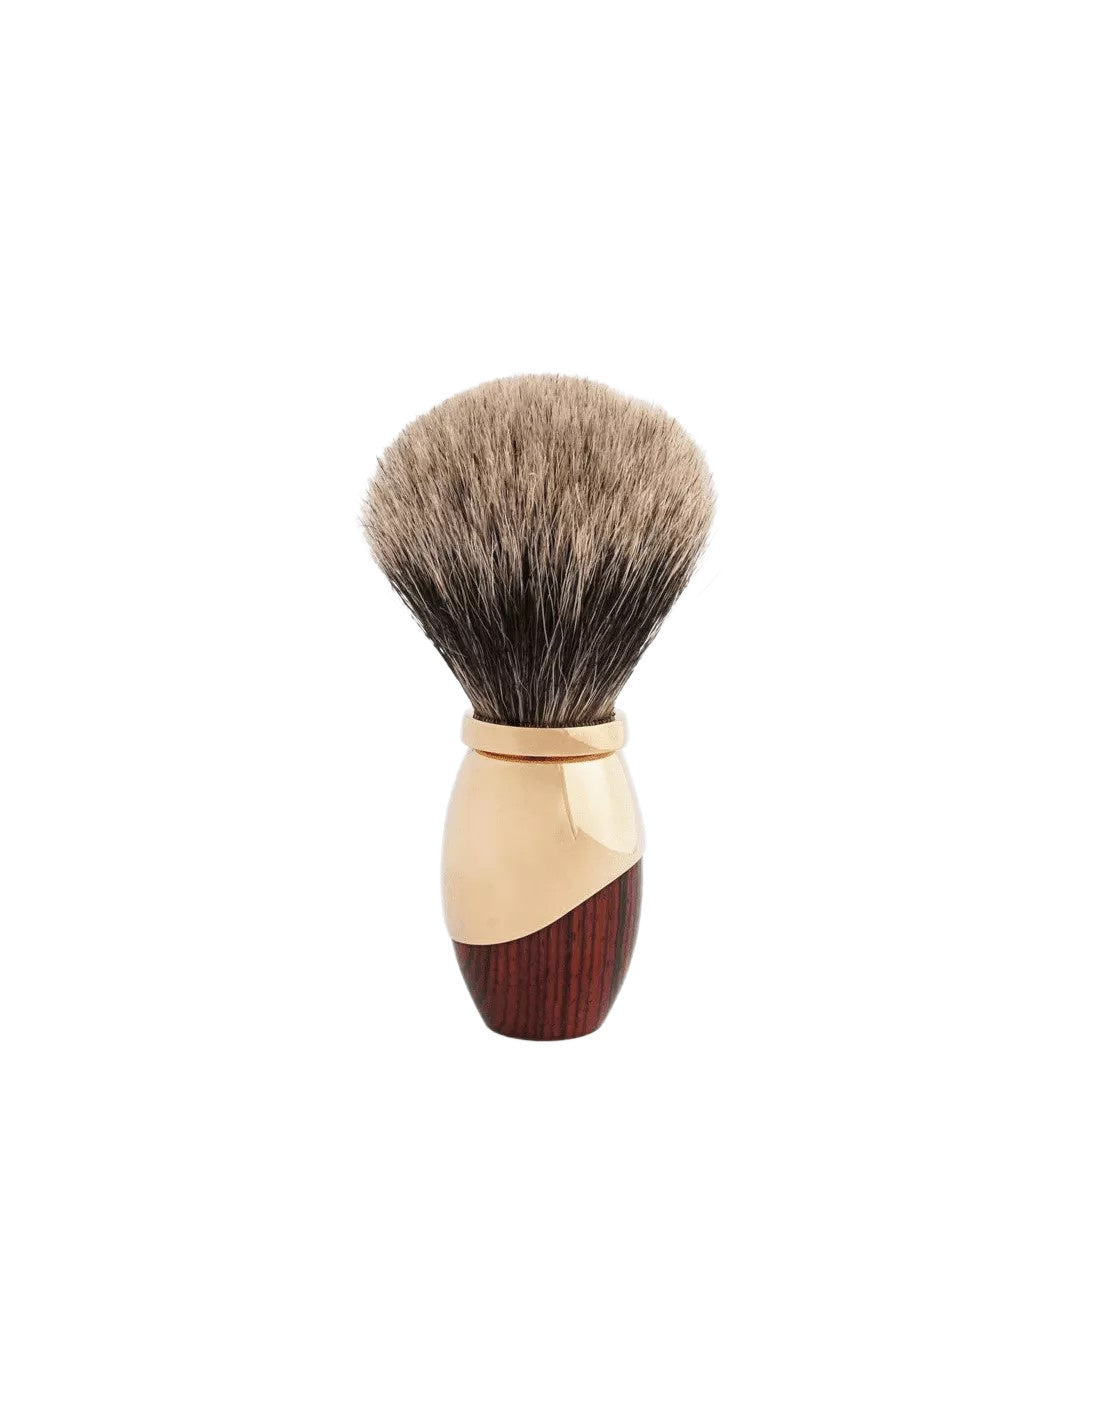 Plisson 1808 Odyssee Genuine Badger - Royal Palissander & Gold Shaving Brush